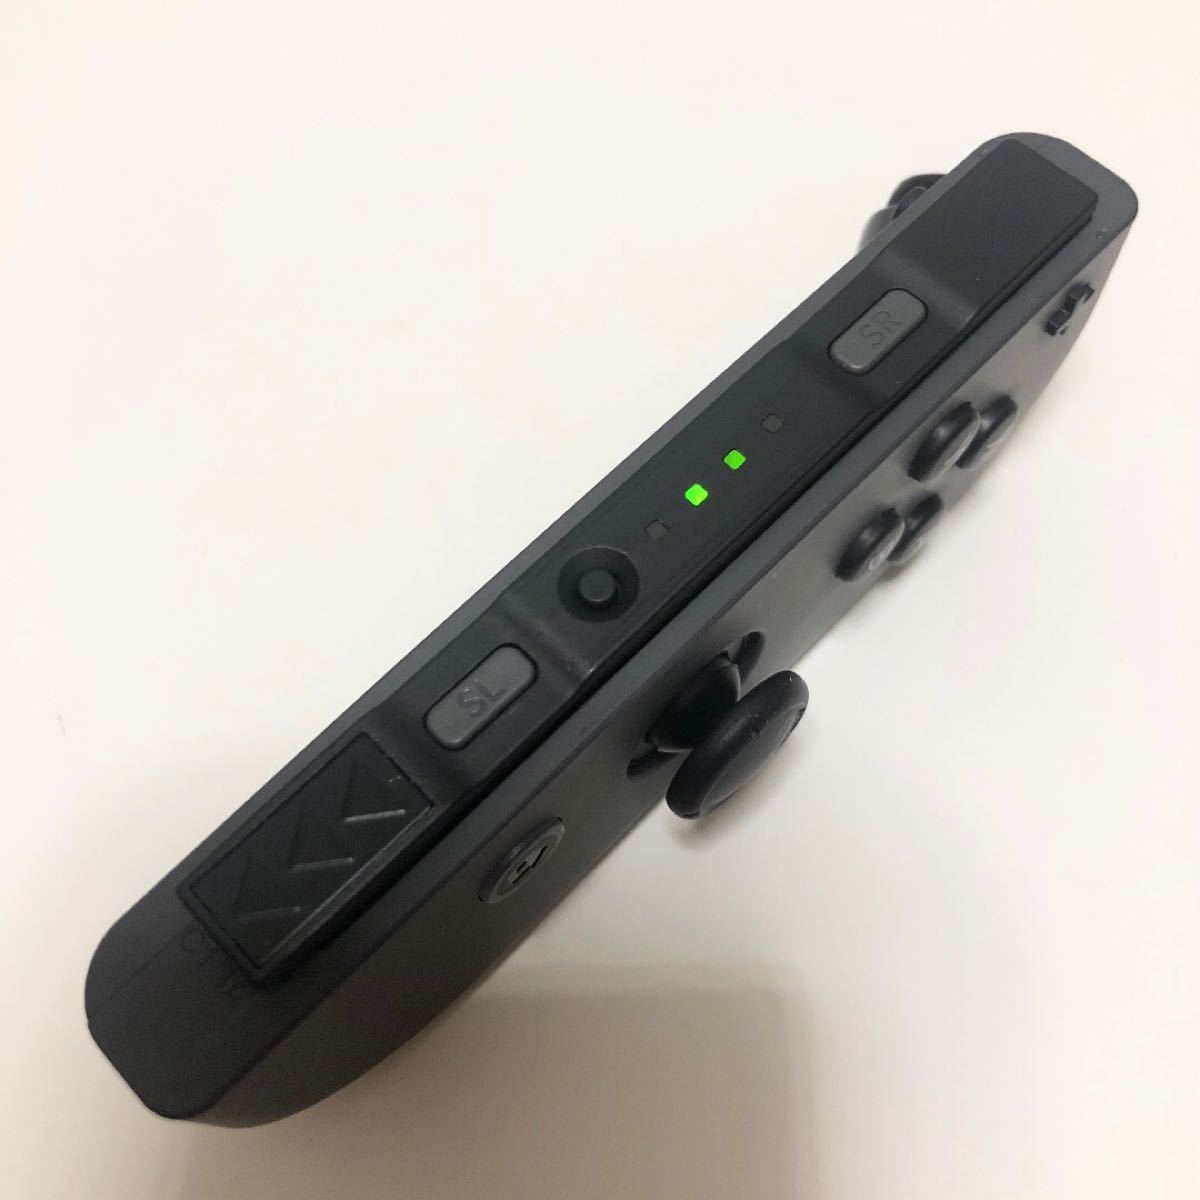 Nintendo Switch Joy-Con グレー 右 ジョイコン ニンテンドースイッチ　任天堂　コントローラー